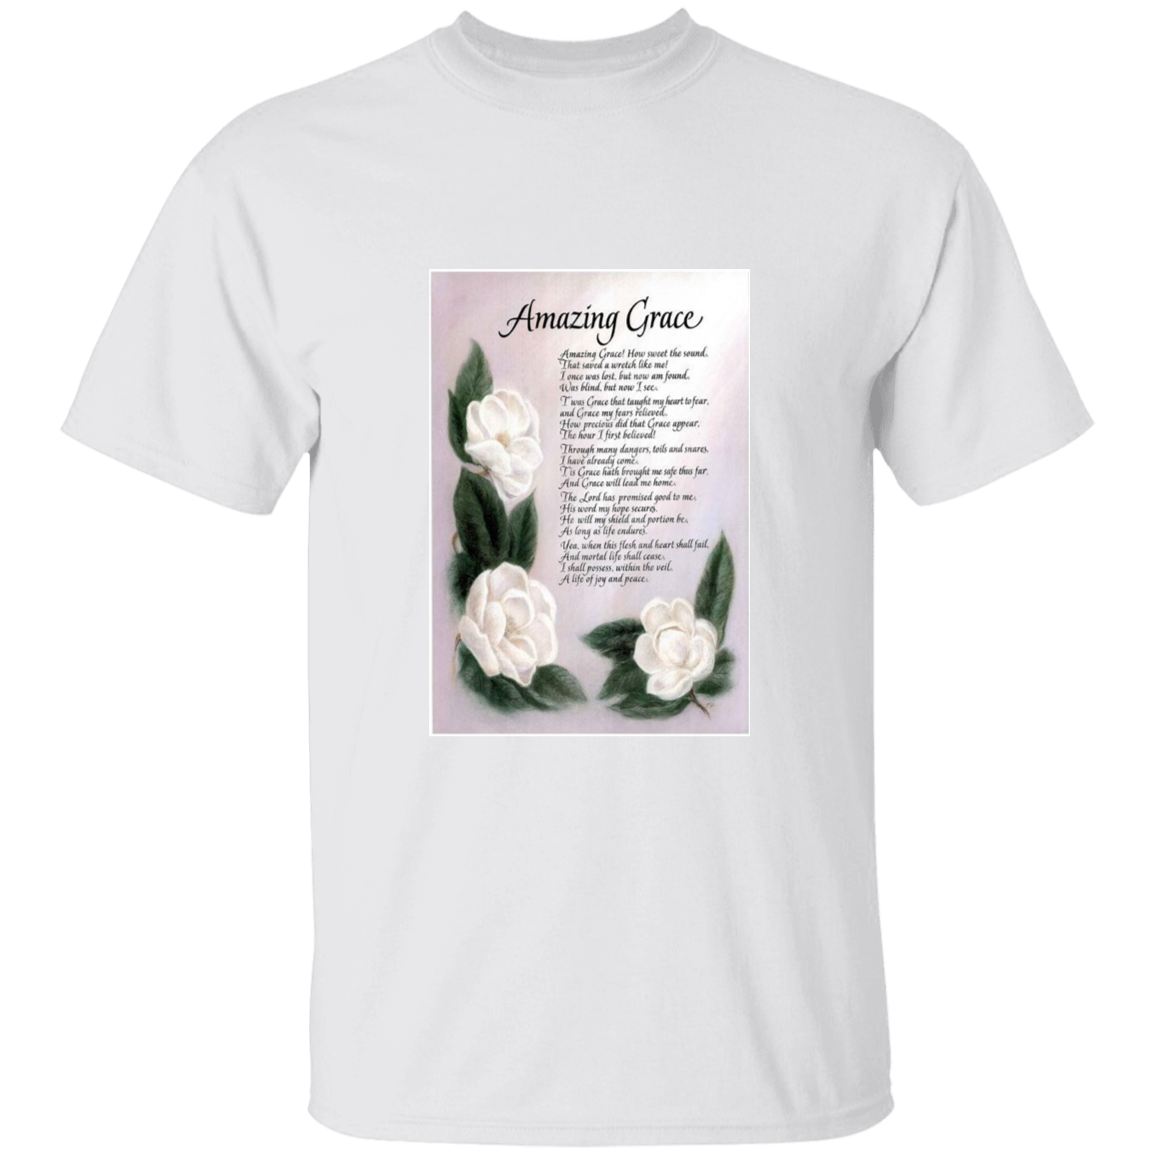 Amazing grace with magnolias T-shirt